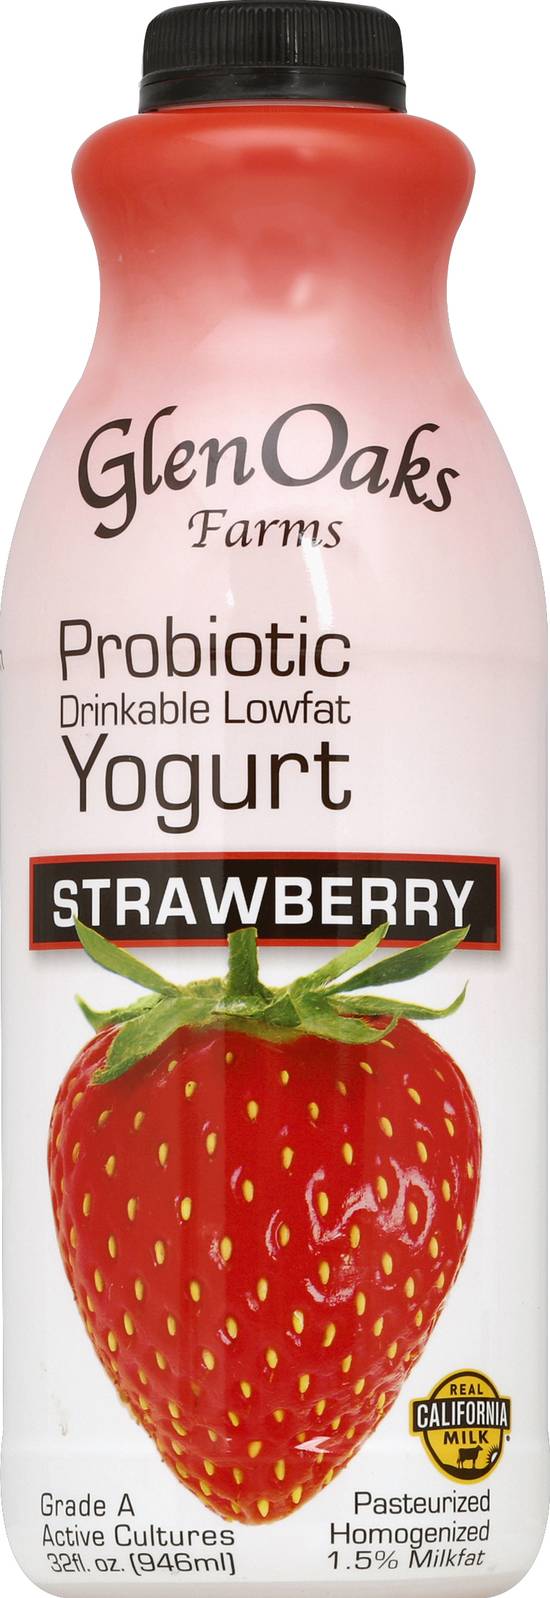 Glenoaks Strawberry Probiotic Drinkable Lowfat Yogurt